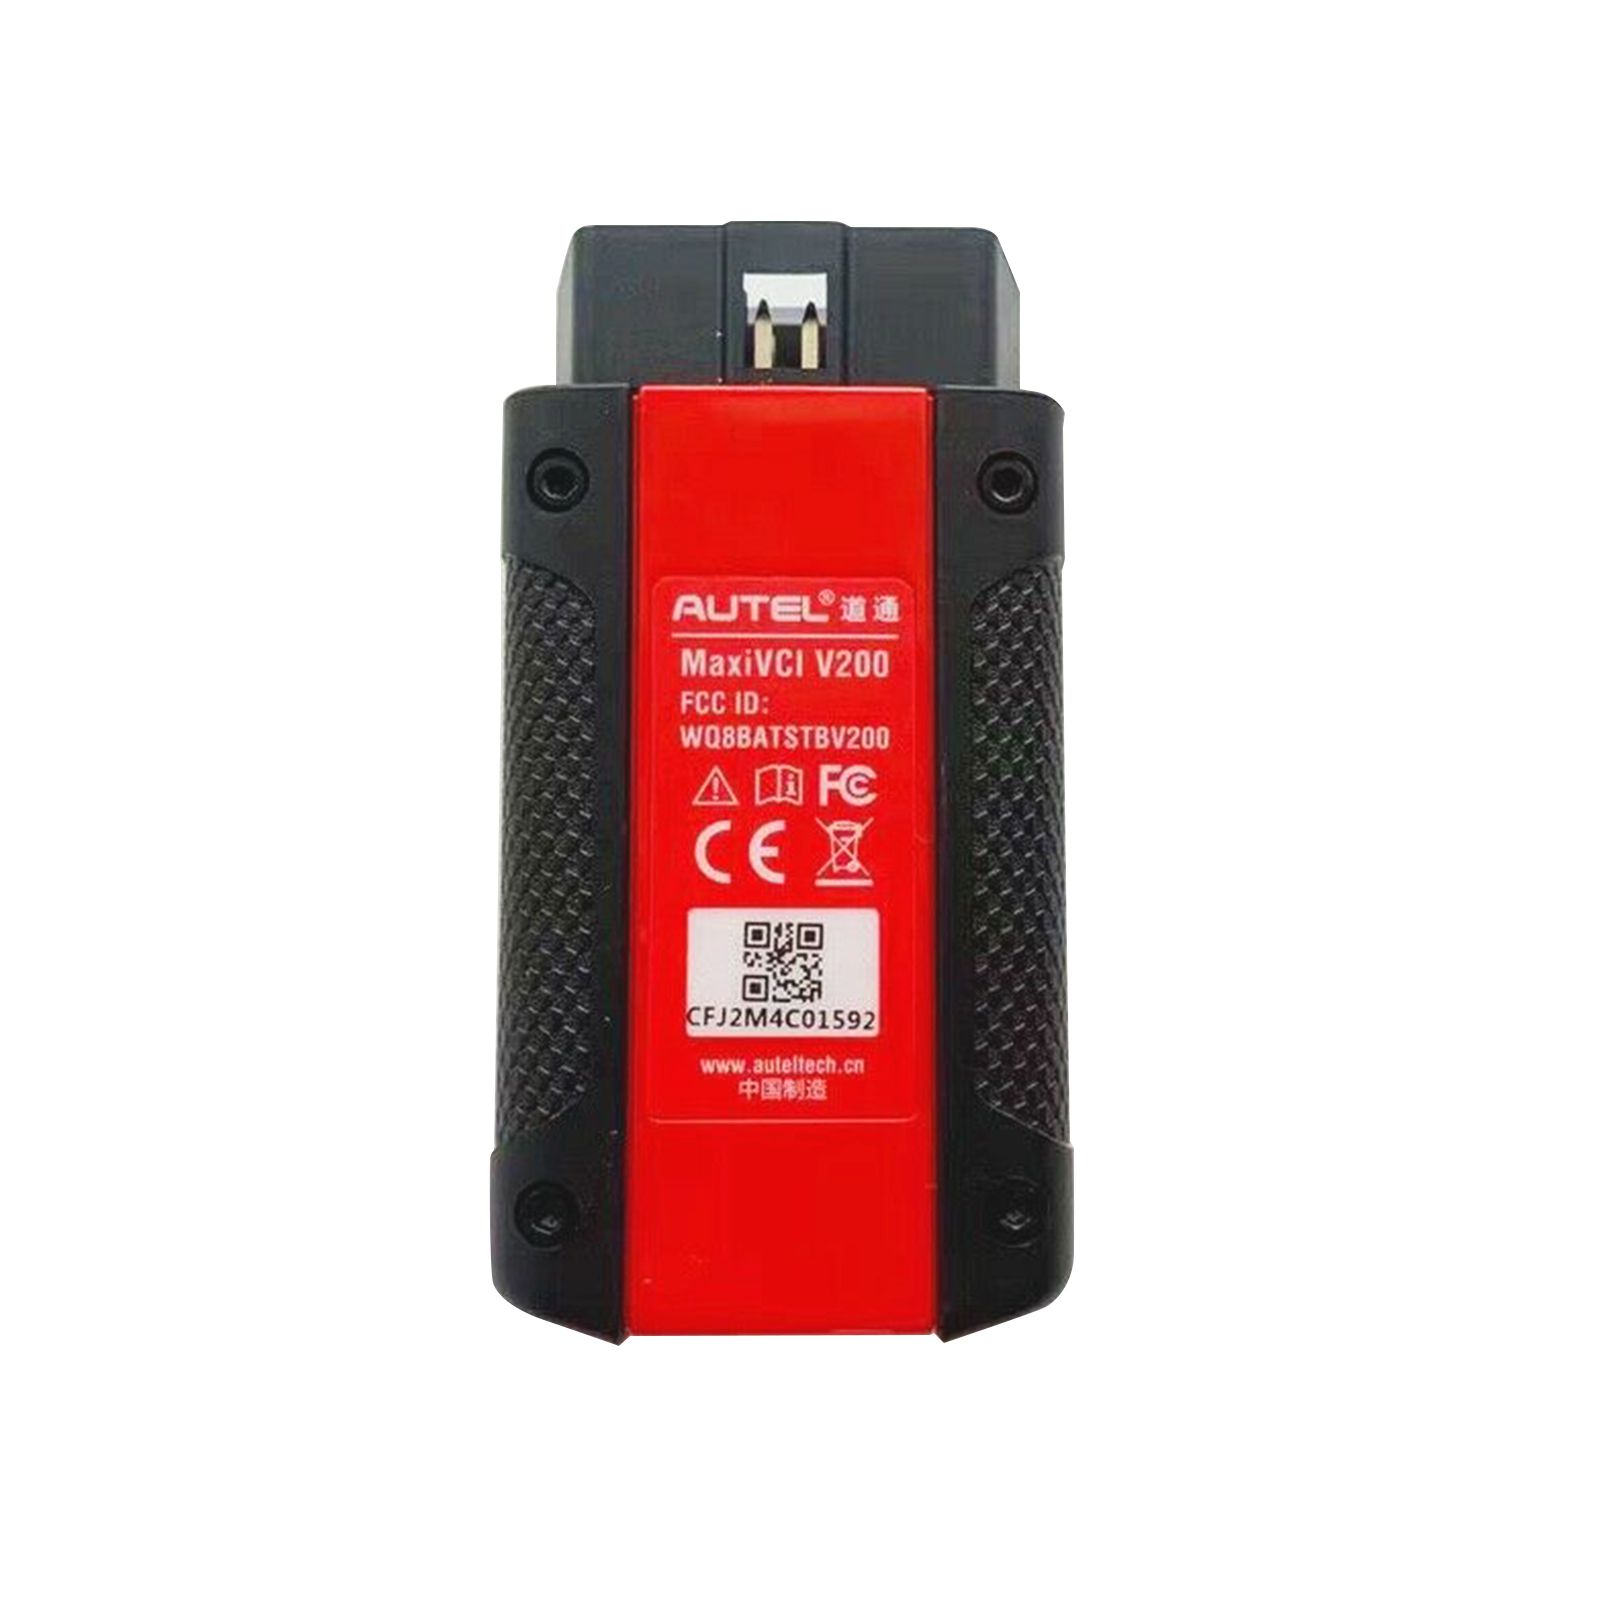 Authel maxivci VCI 200 Bluetooth se utiliza con la tableta de diagnóstico ms906 pro its600k8